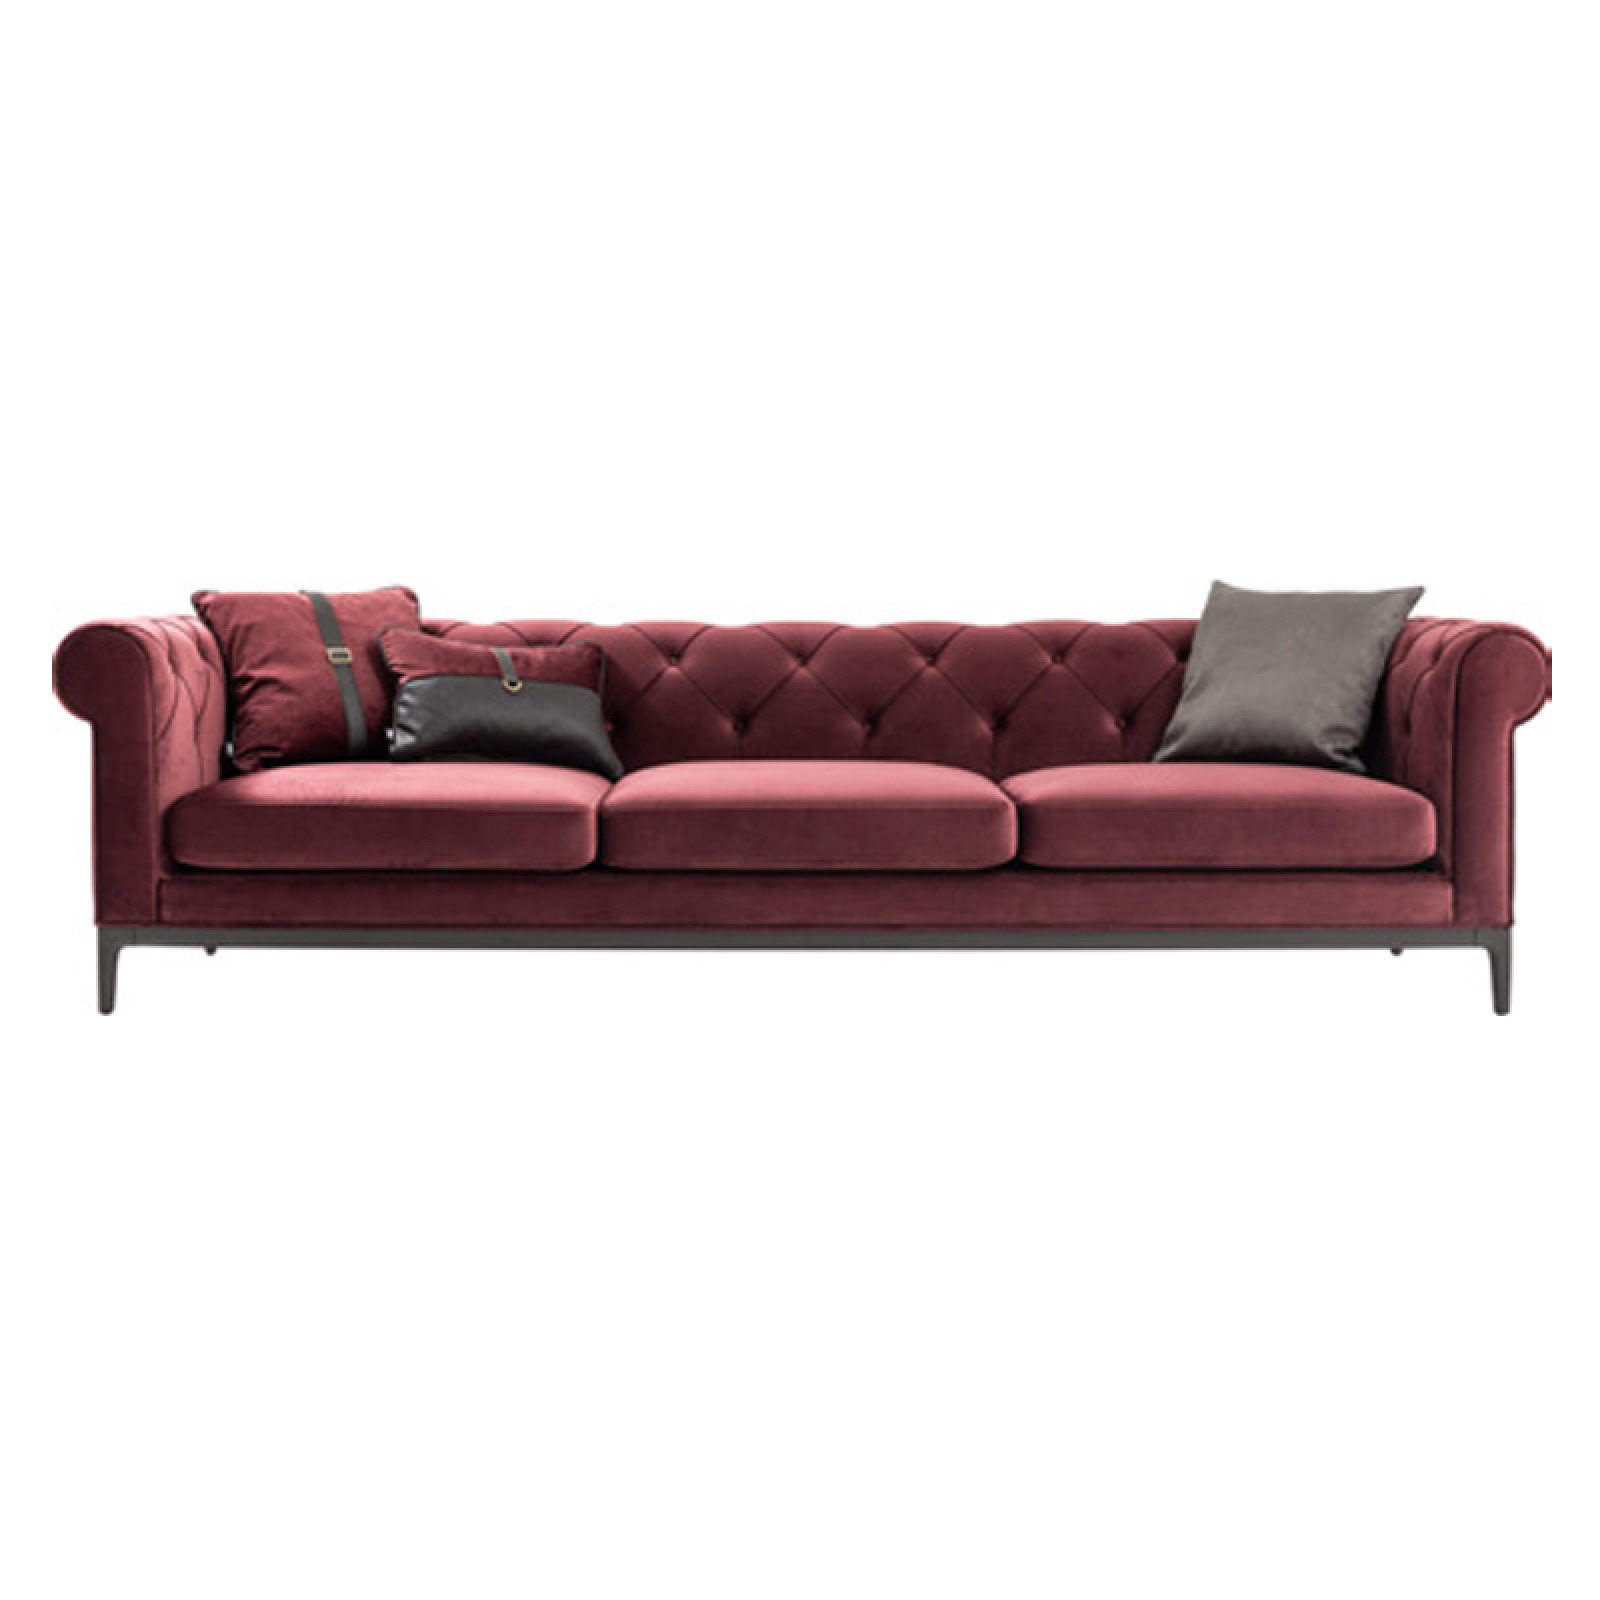 Lincoln burgundy sofa